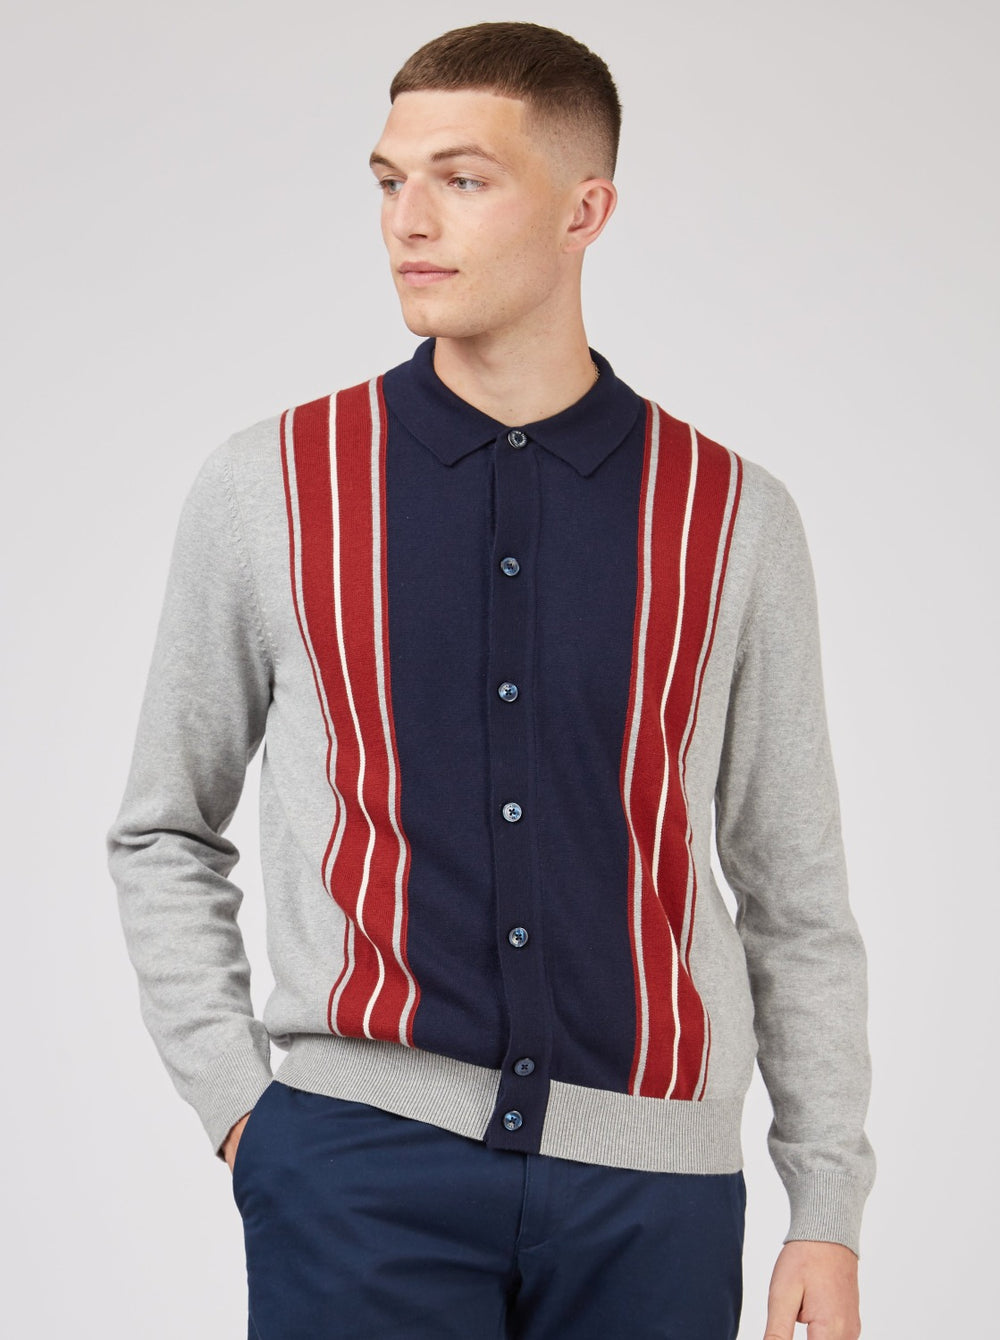 Ben Sherman, Long-Sleeve Knit Polo, Men's Sweater Polo, gray, navy, Spring Polo, Collared Sweater Polo, model hand in pocket